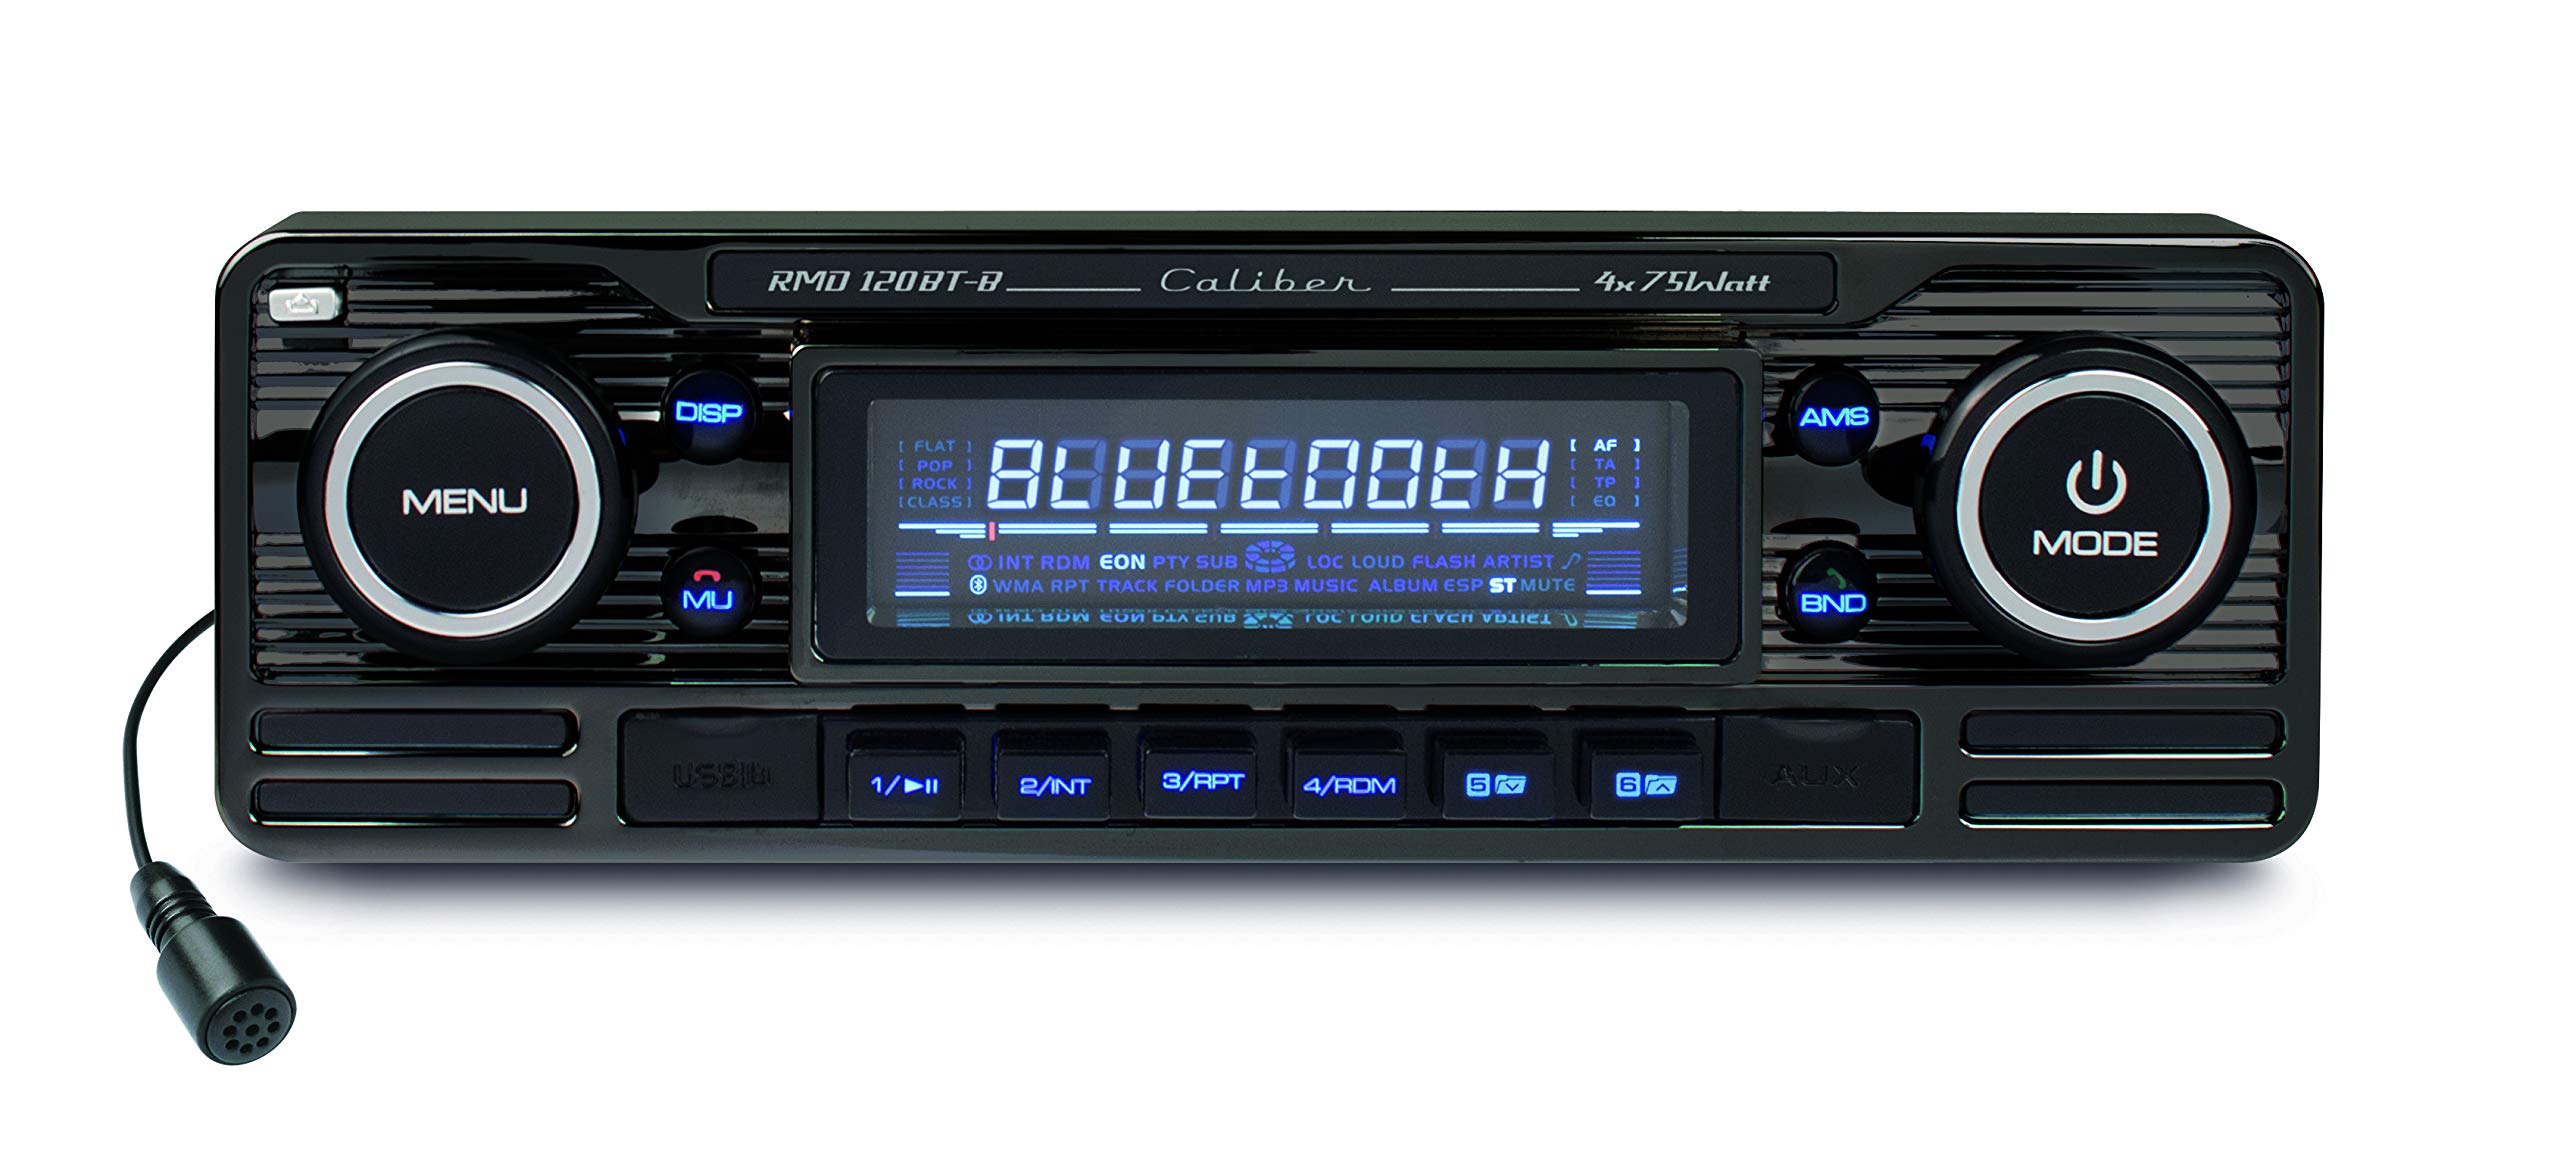 Caliber Retro Autoradio - Auto Radio Bluetooth USB - FM - 1 DIN Radio Auto - Autoradio mit Bluetooth Freisprecheinrichtung - Schwarz